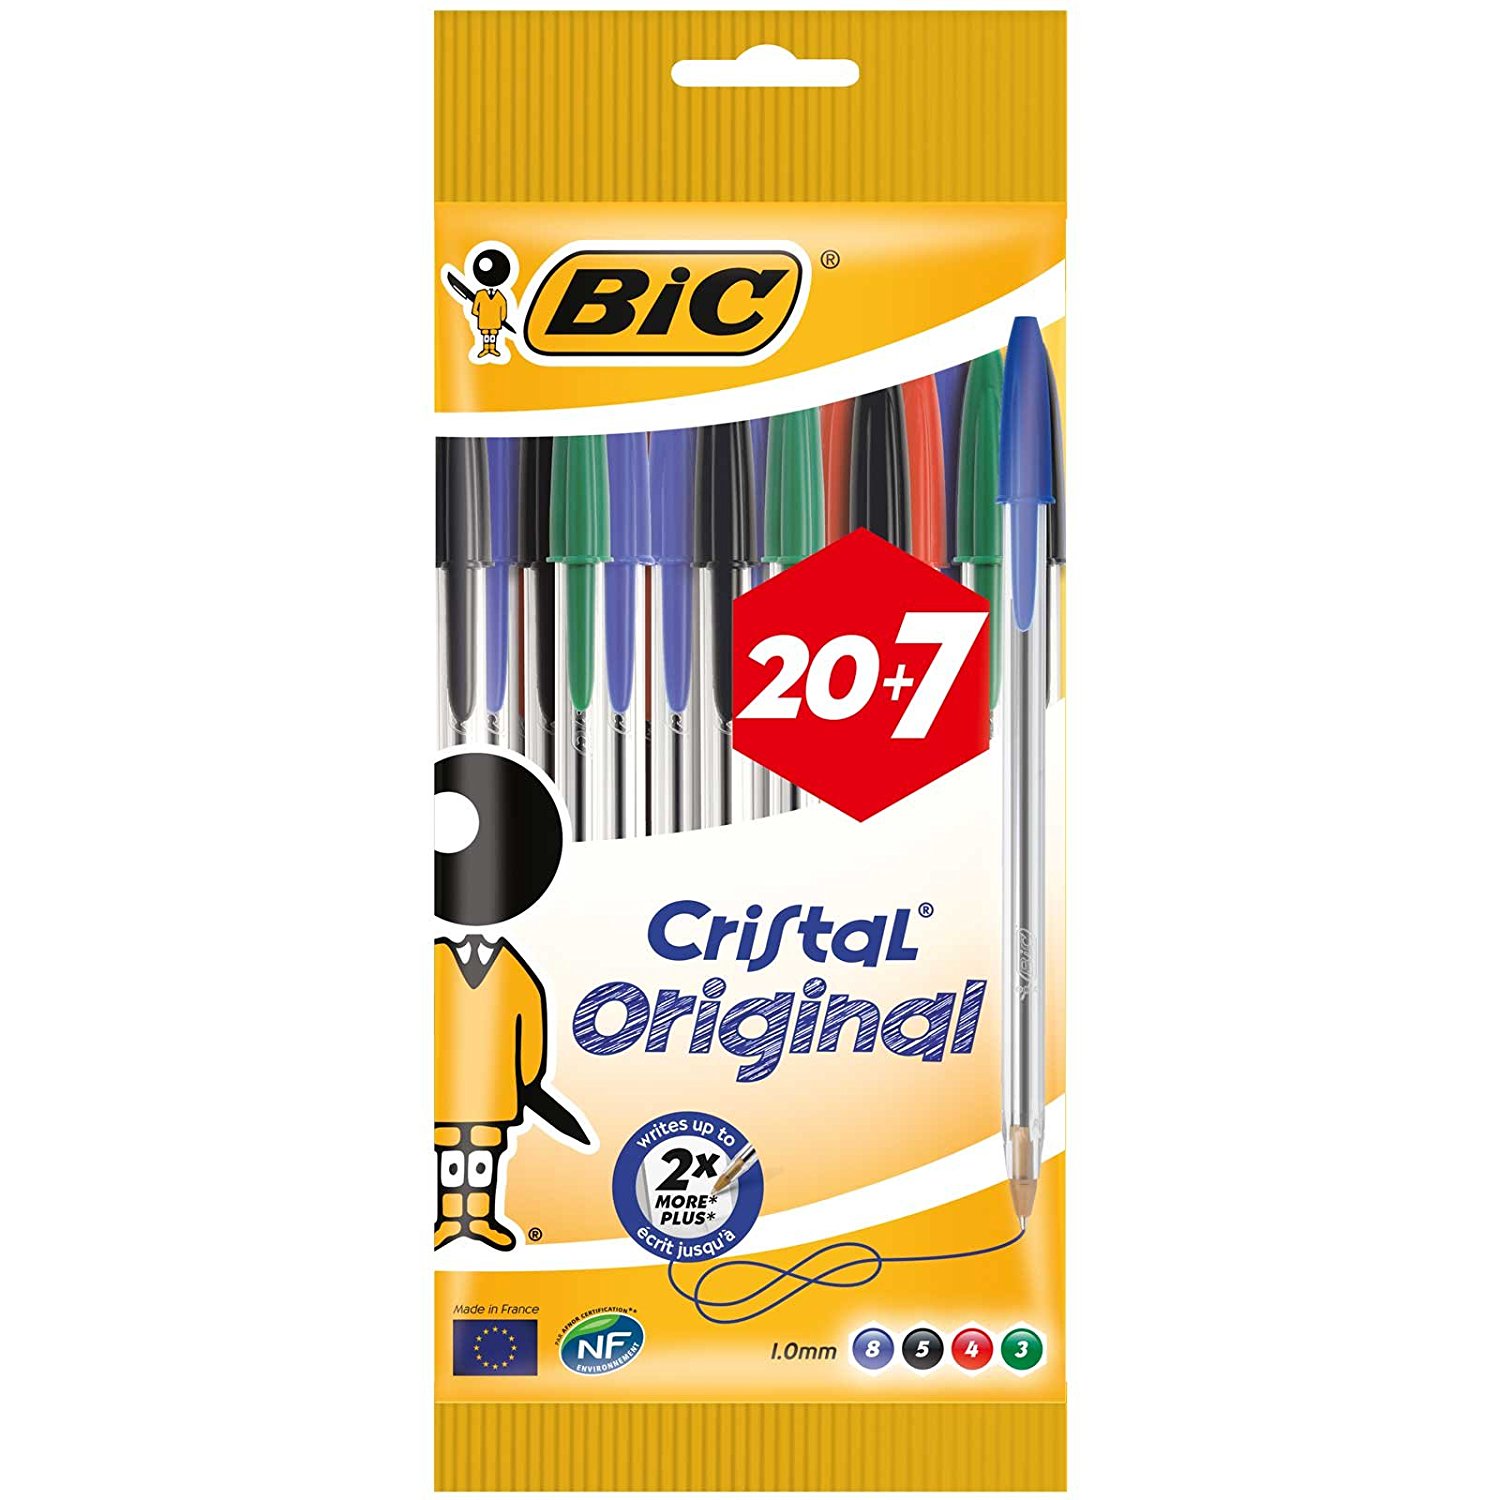 Pack de 20 + 7 bolígrafos BIC Cristal Original chollo plus